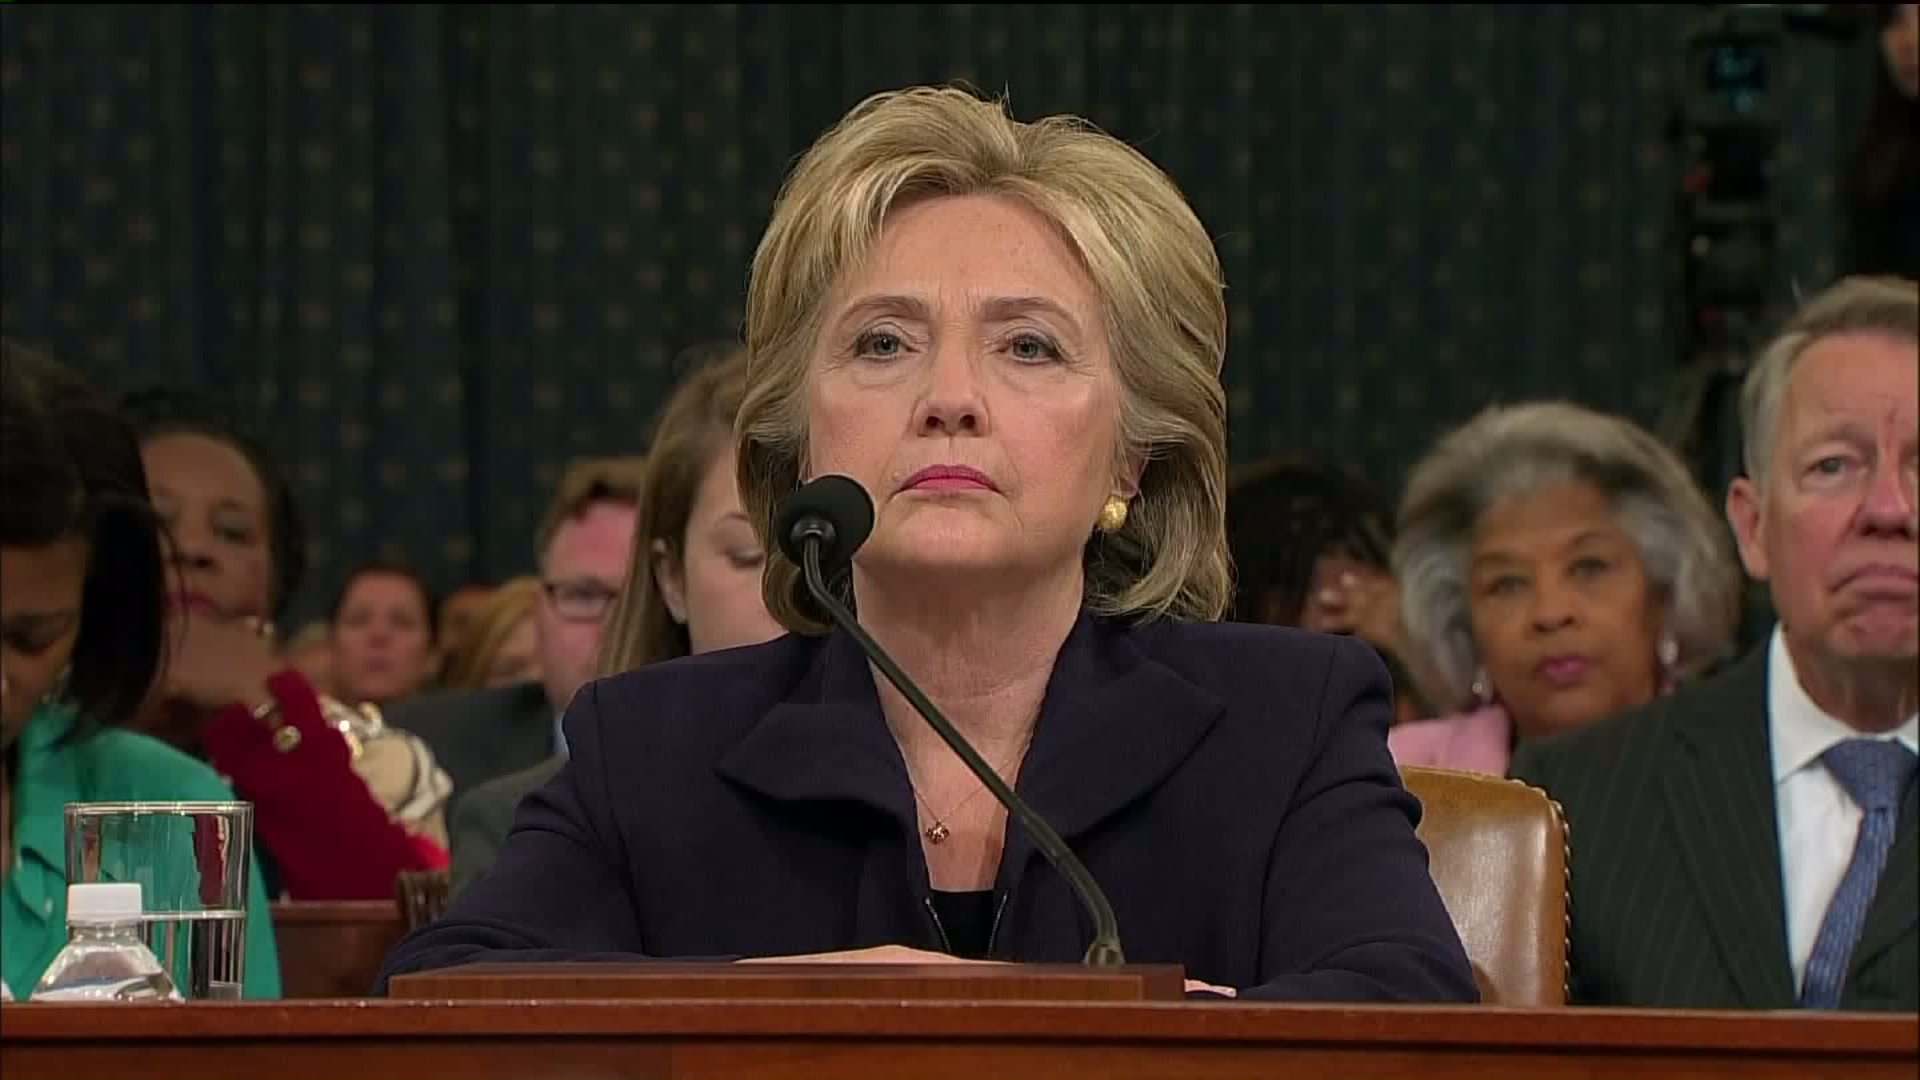 Image: Actress Susan Sarandon Destroys Hillary Clinton (Video)